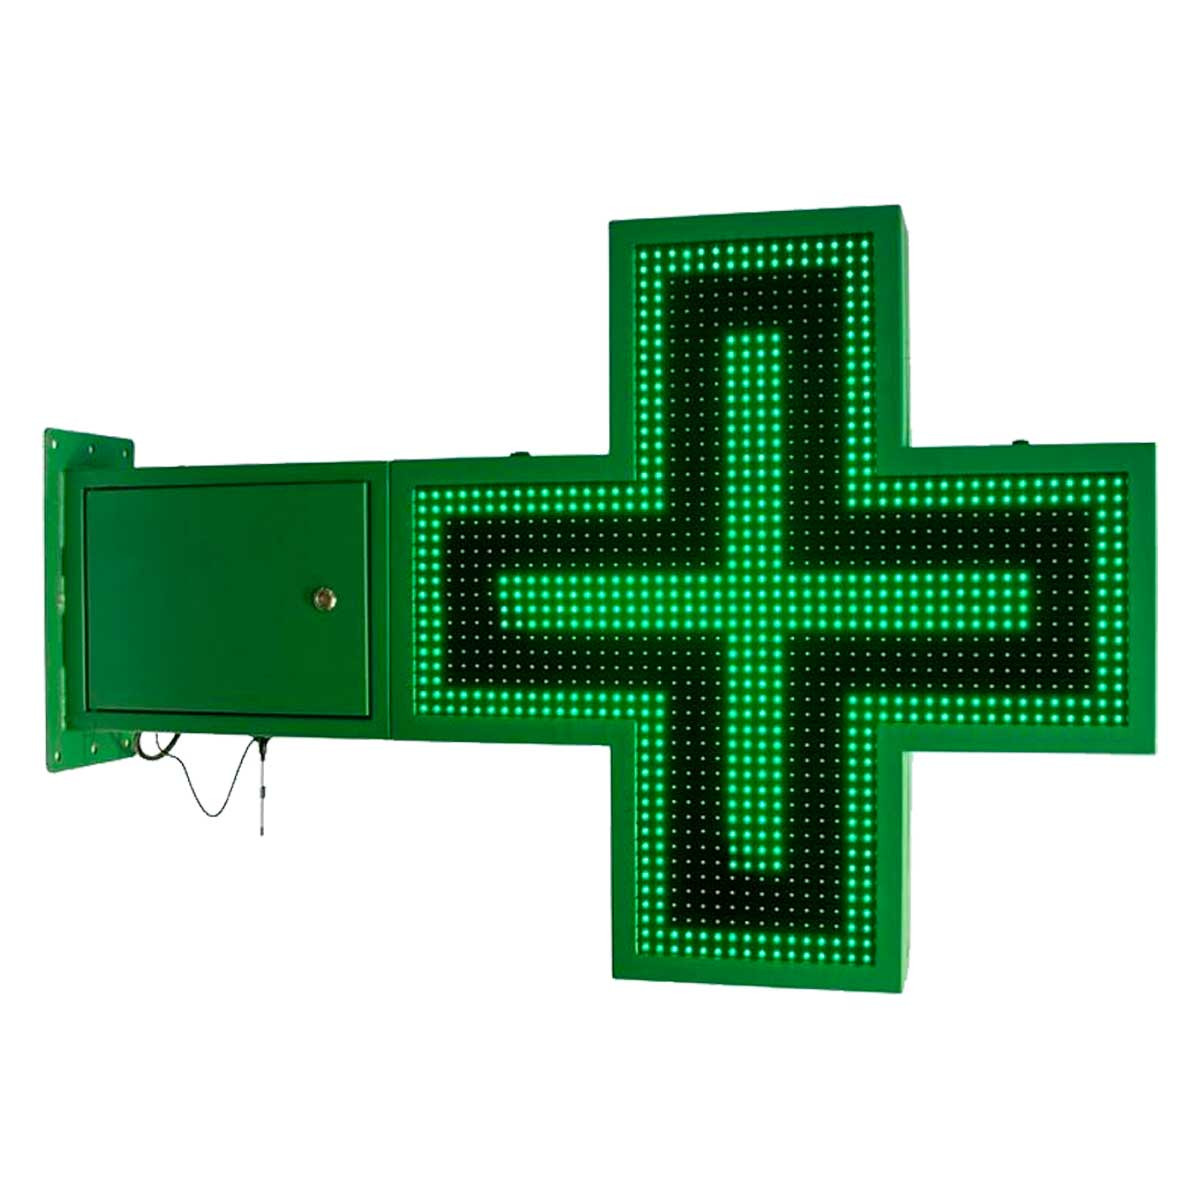 Programmierbares grünes LED-Apothekenkreuz P16 - Außeneinsatz